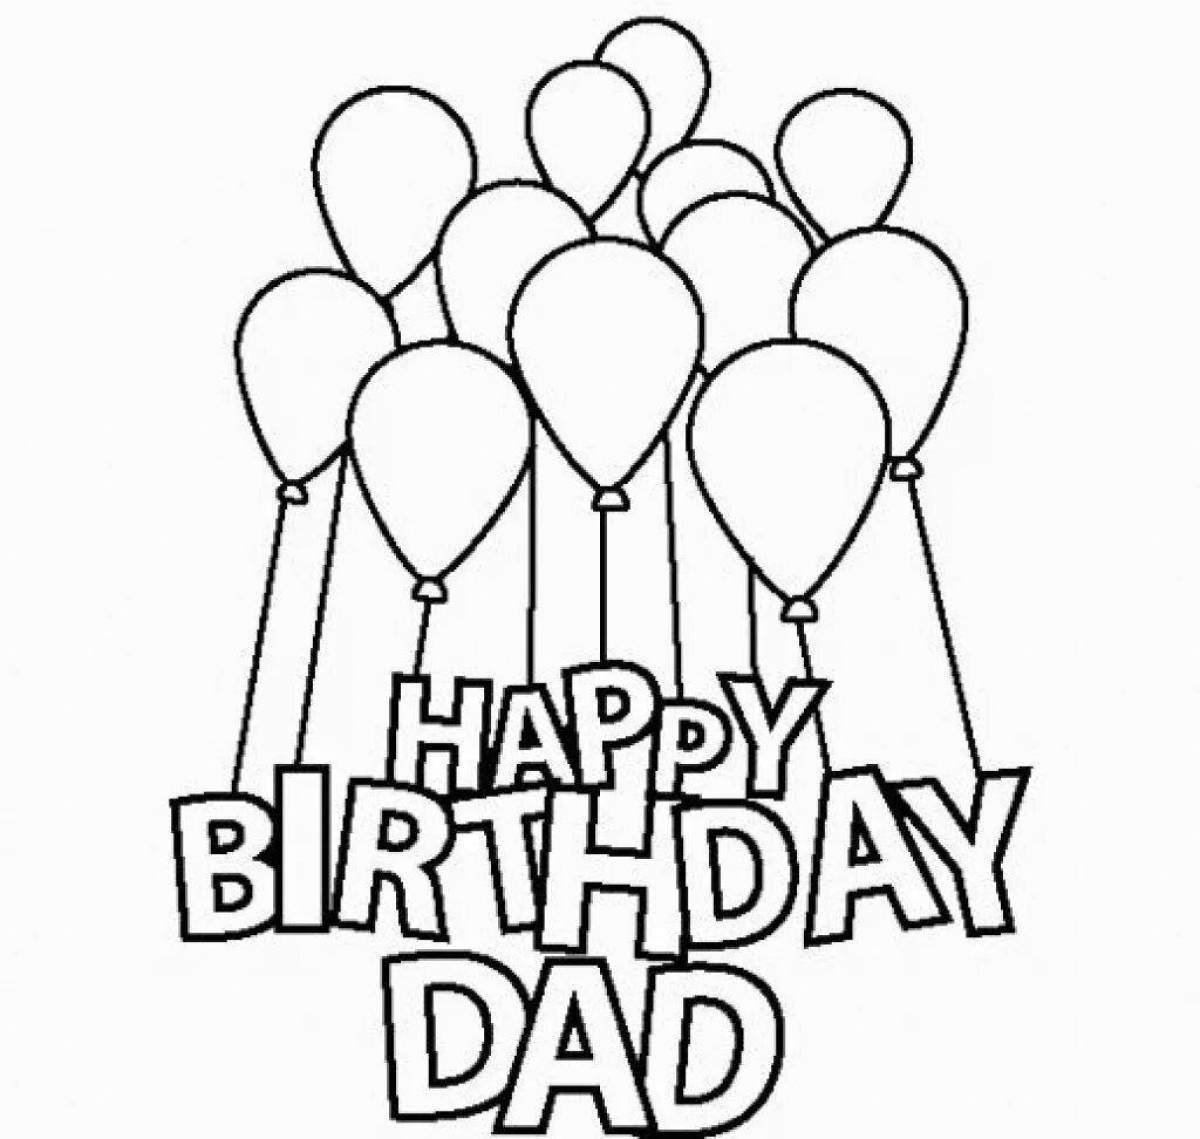 Happy birthday card for dad